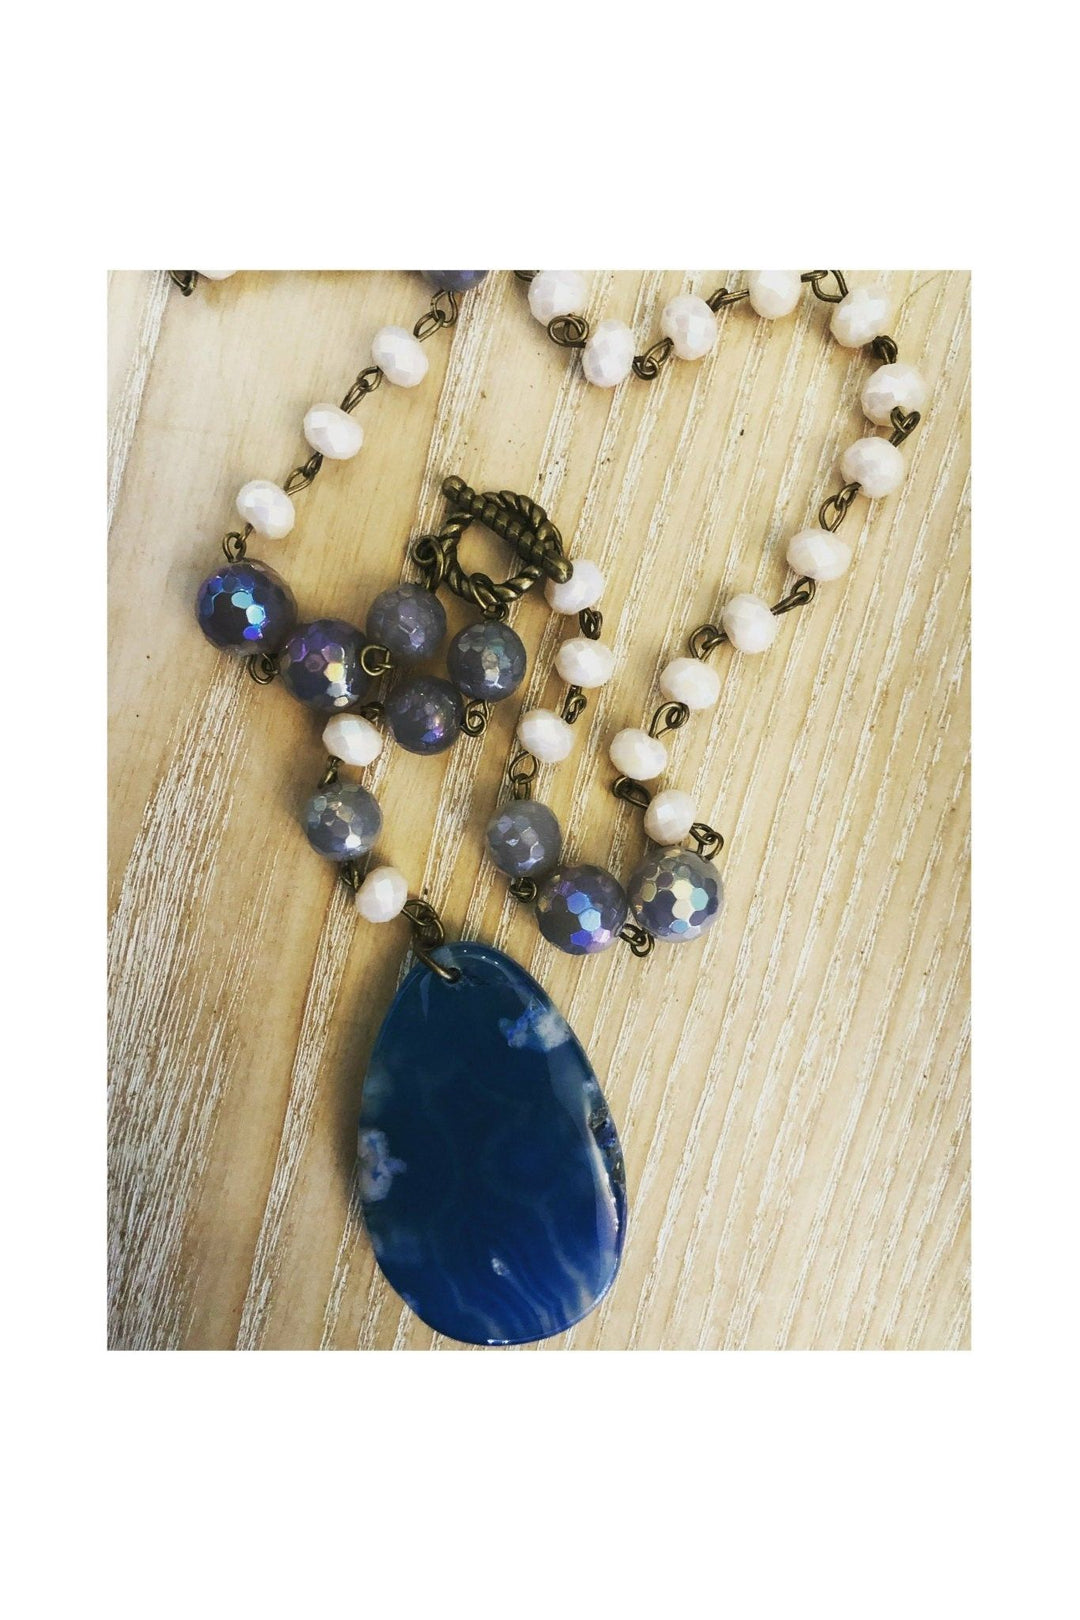 Bead/Stone Necklaces by Carol Sug - Vintage Dragonfly Boutique